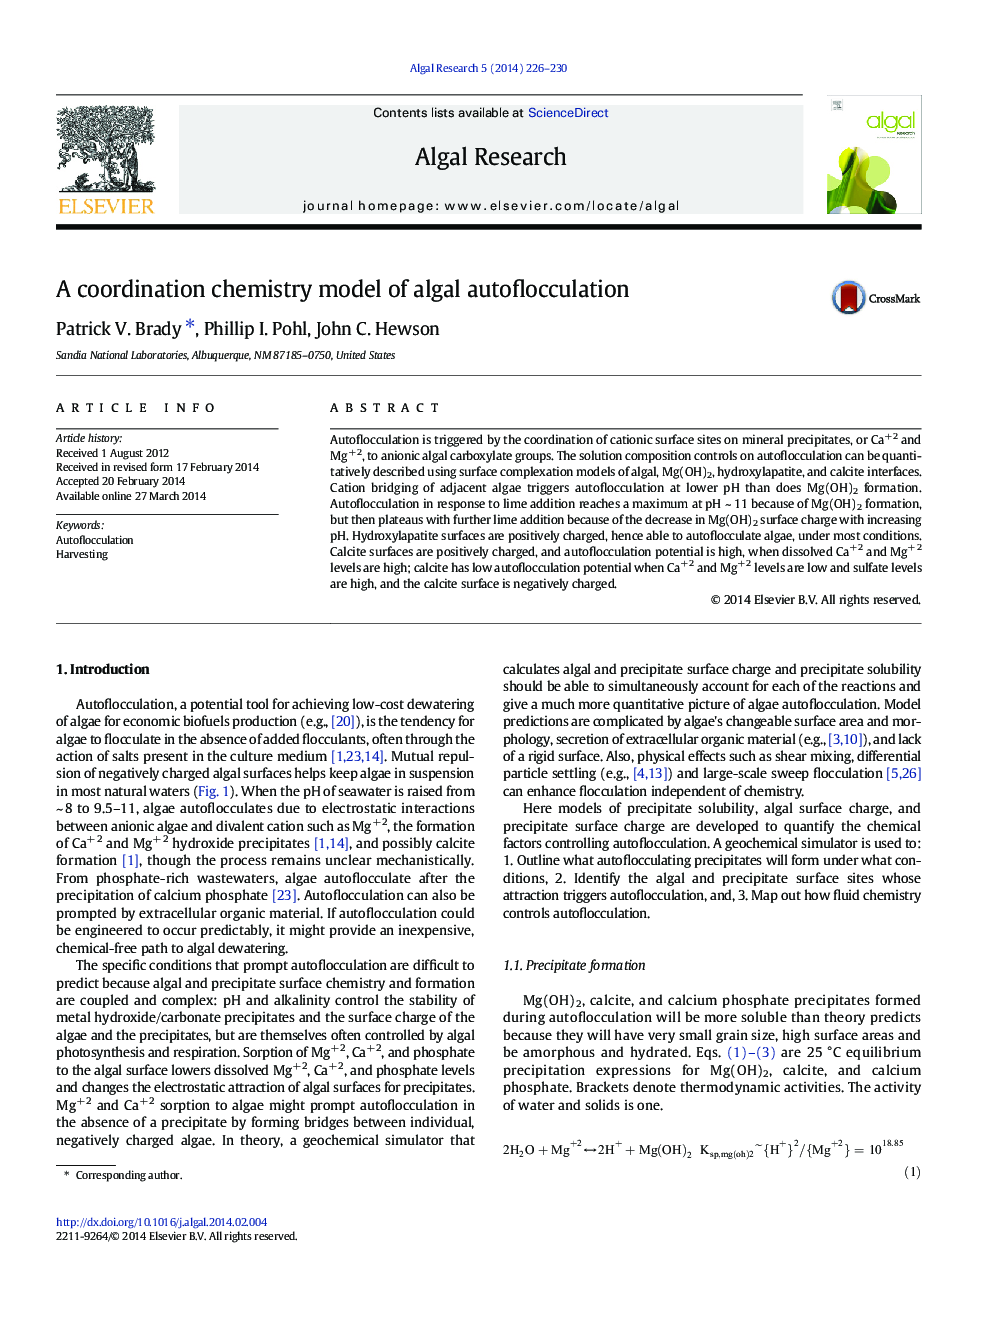 A coordination chemistry model of algal autoflocculation